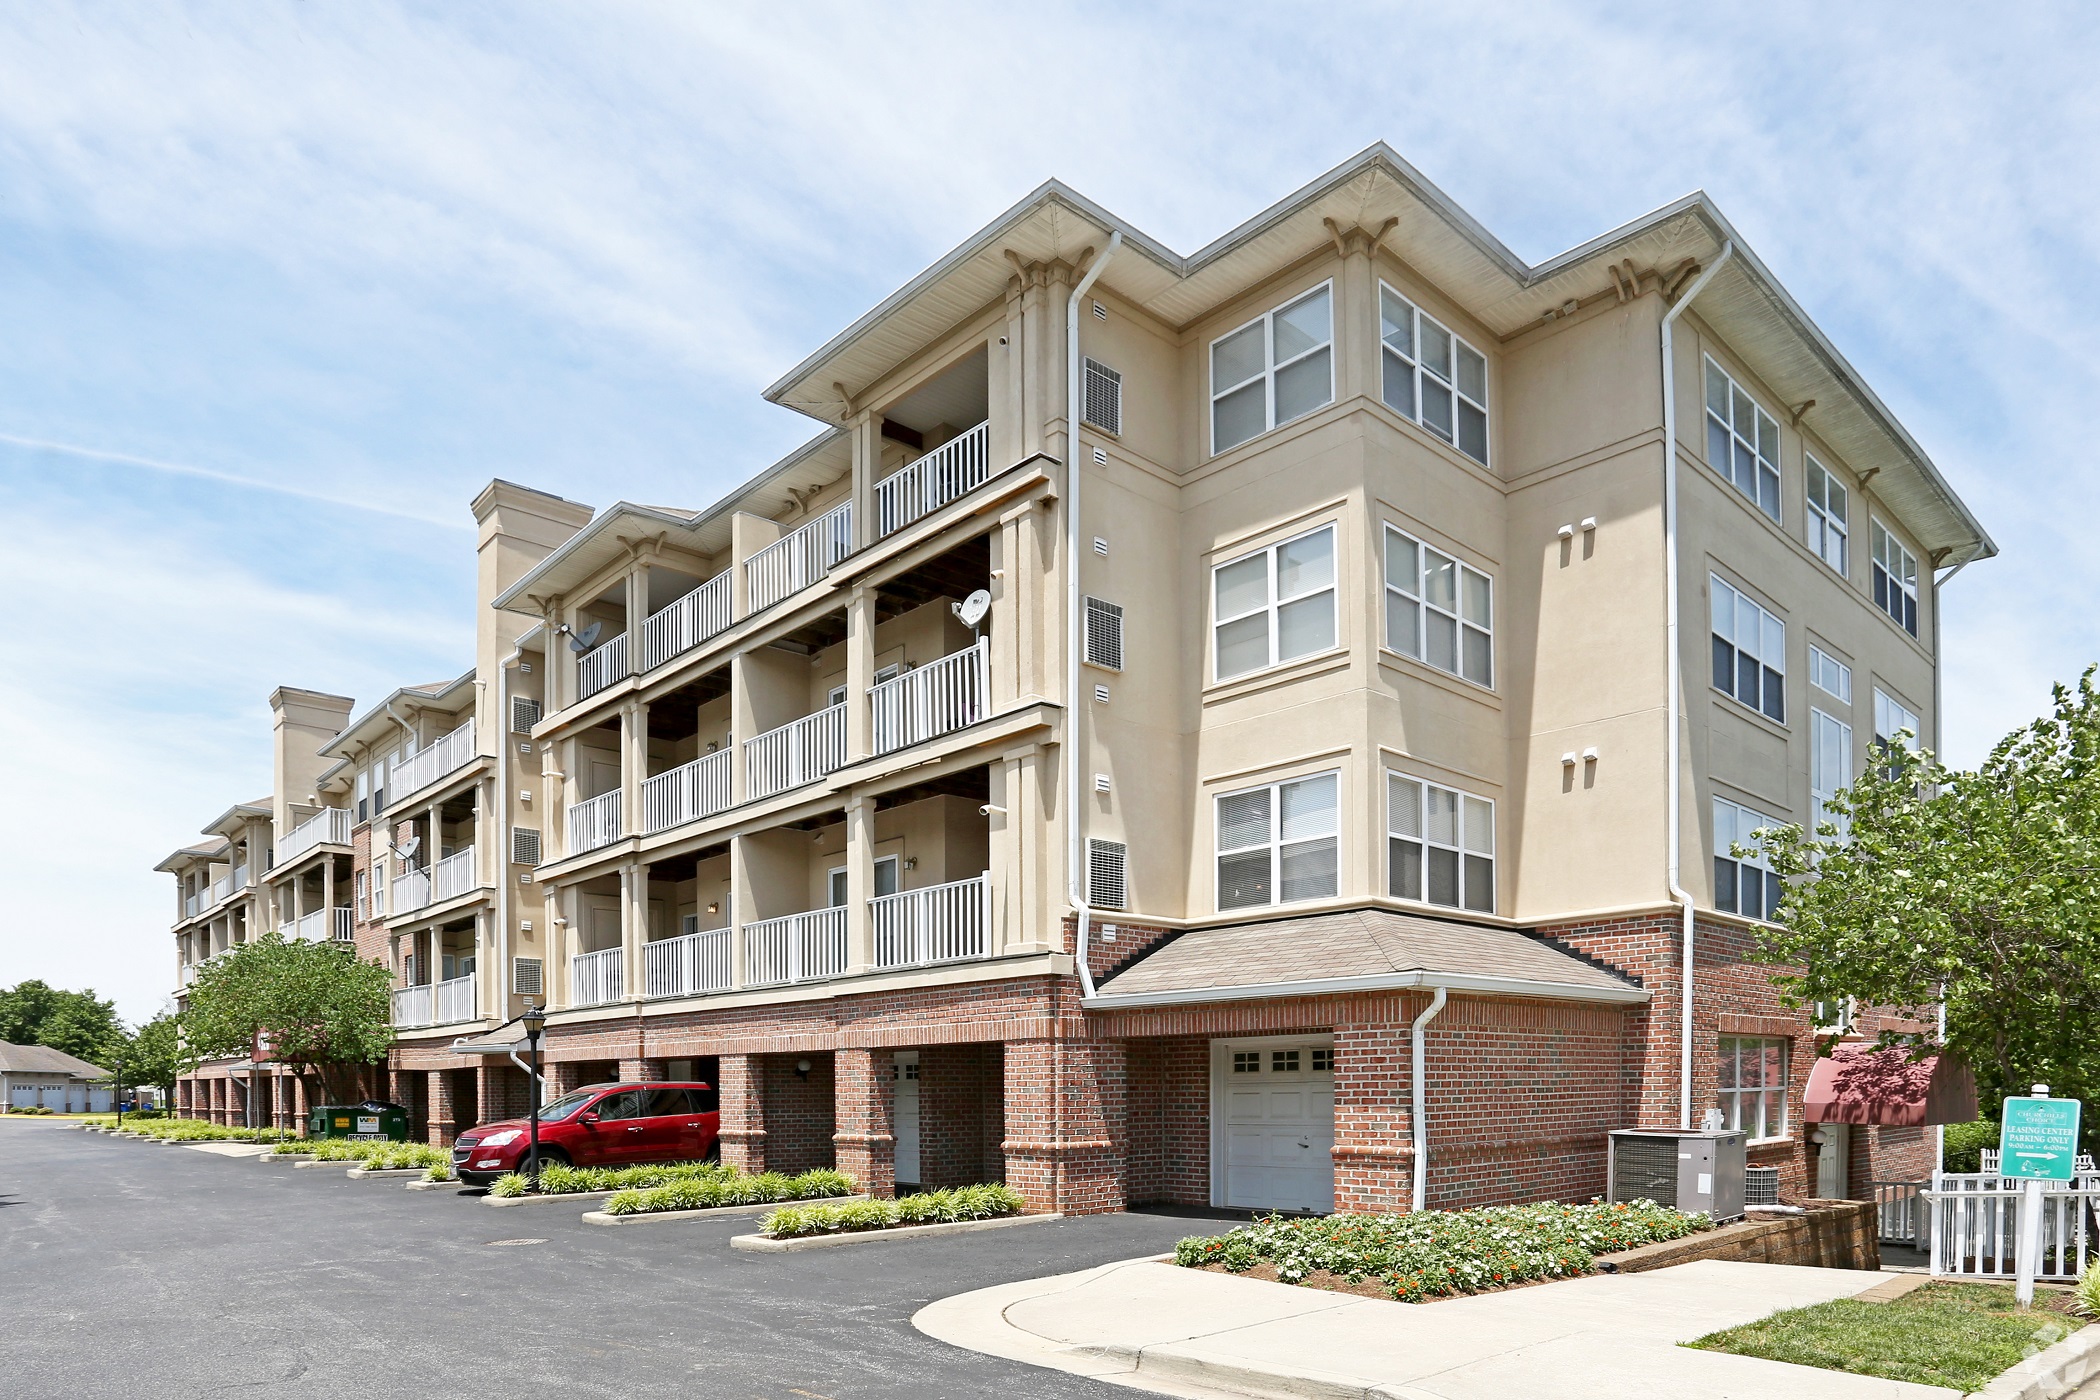 Hamilton Zanze Acquires Village of Churchills Choice and Hunters Glen Apartments Totaling 346-Units in Upper Marlboro, Maryland